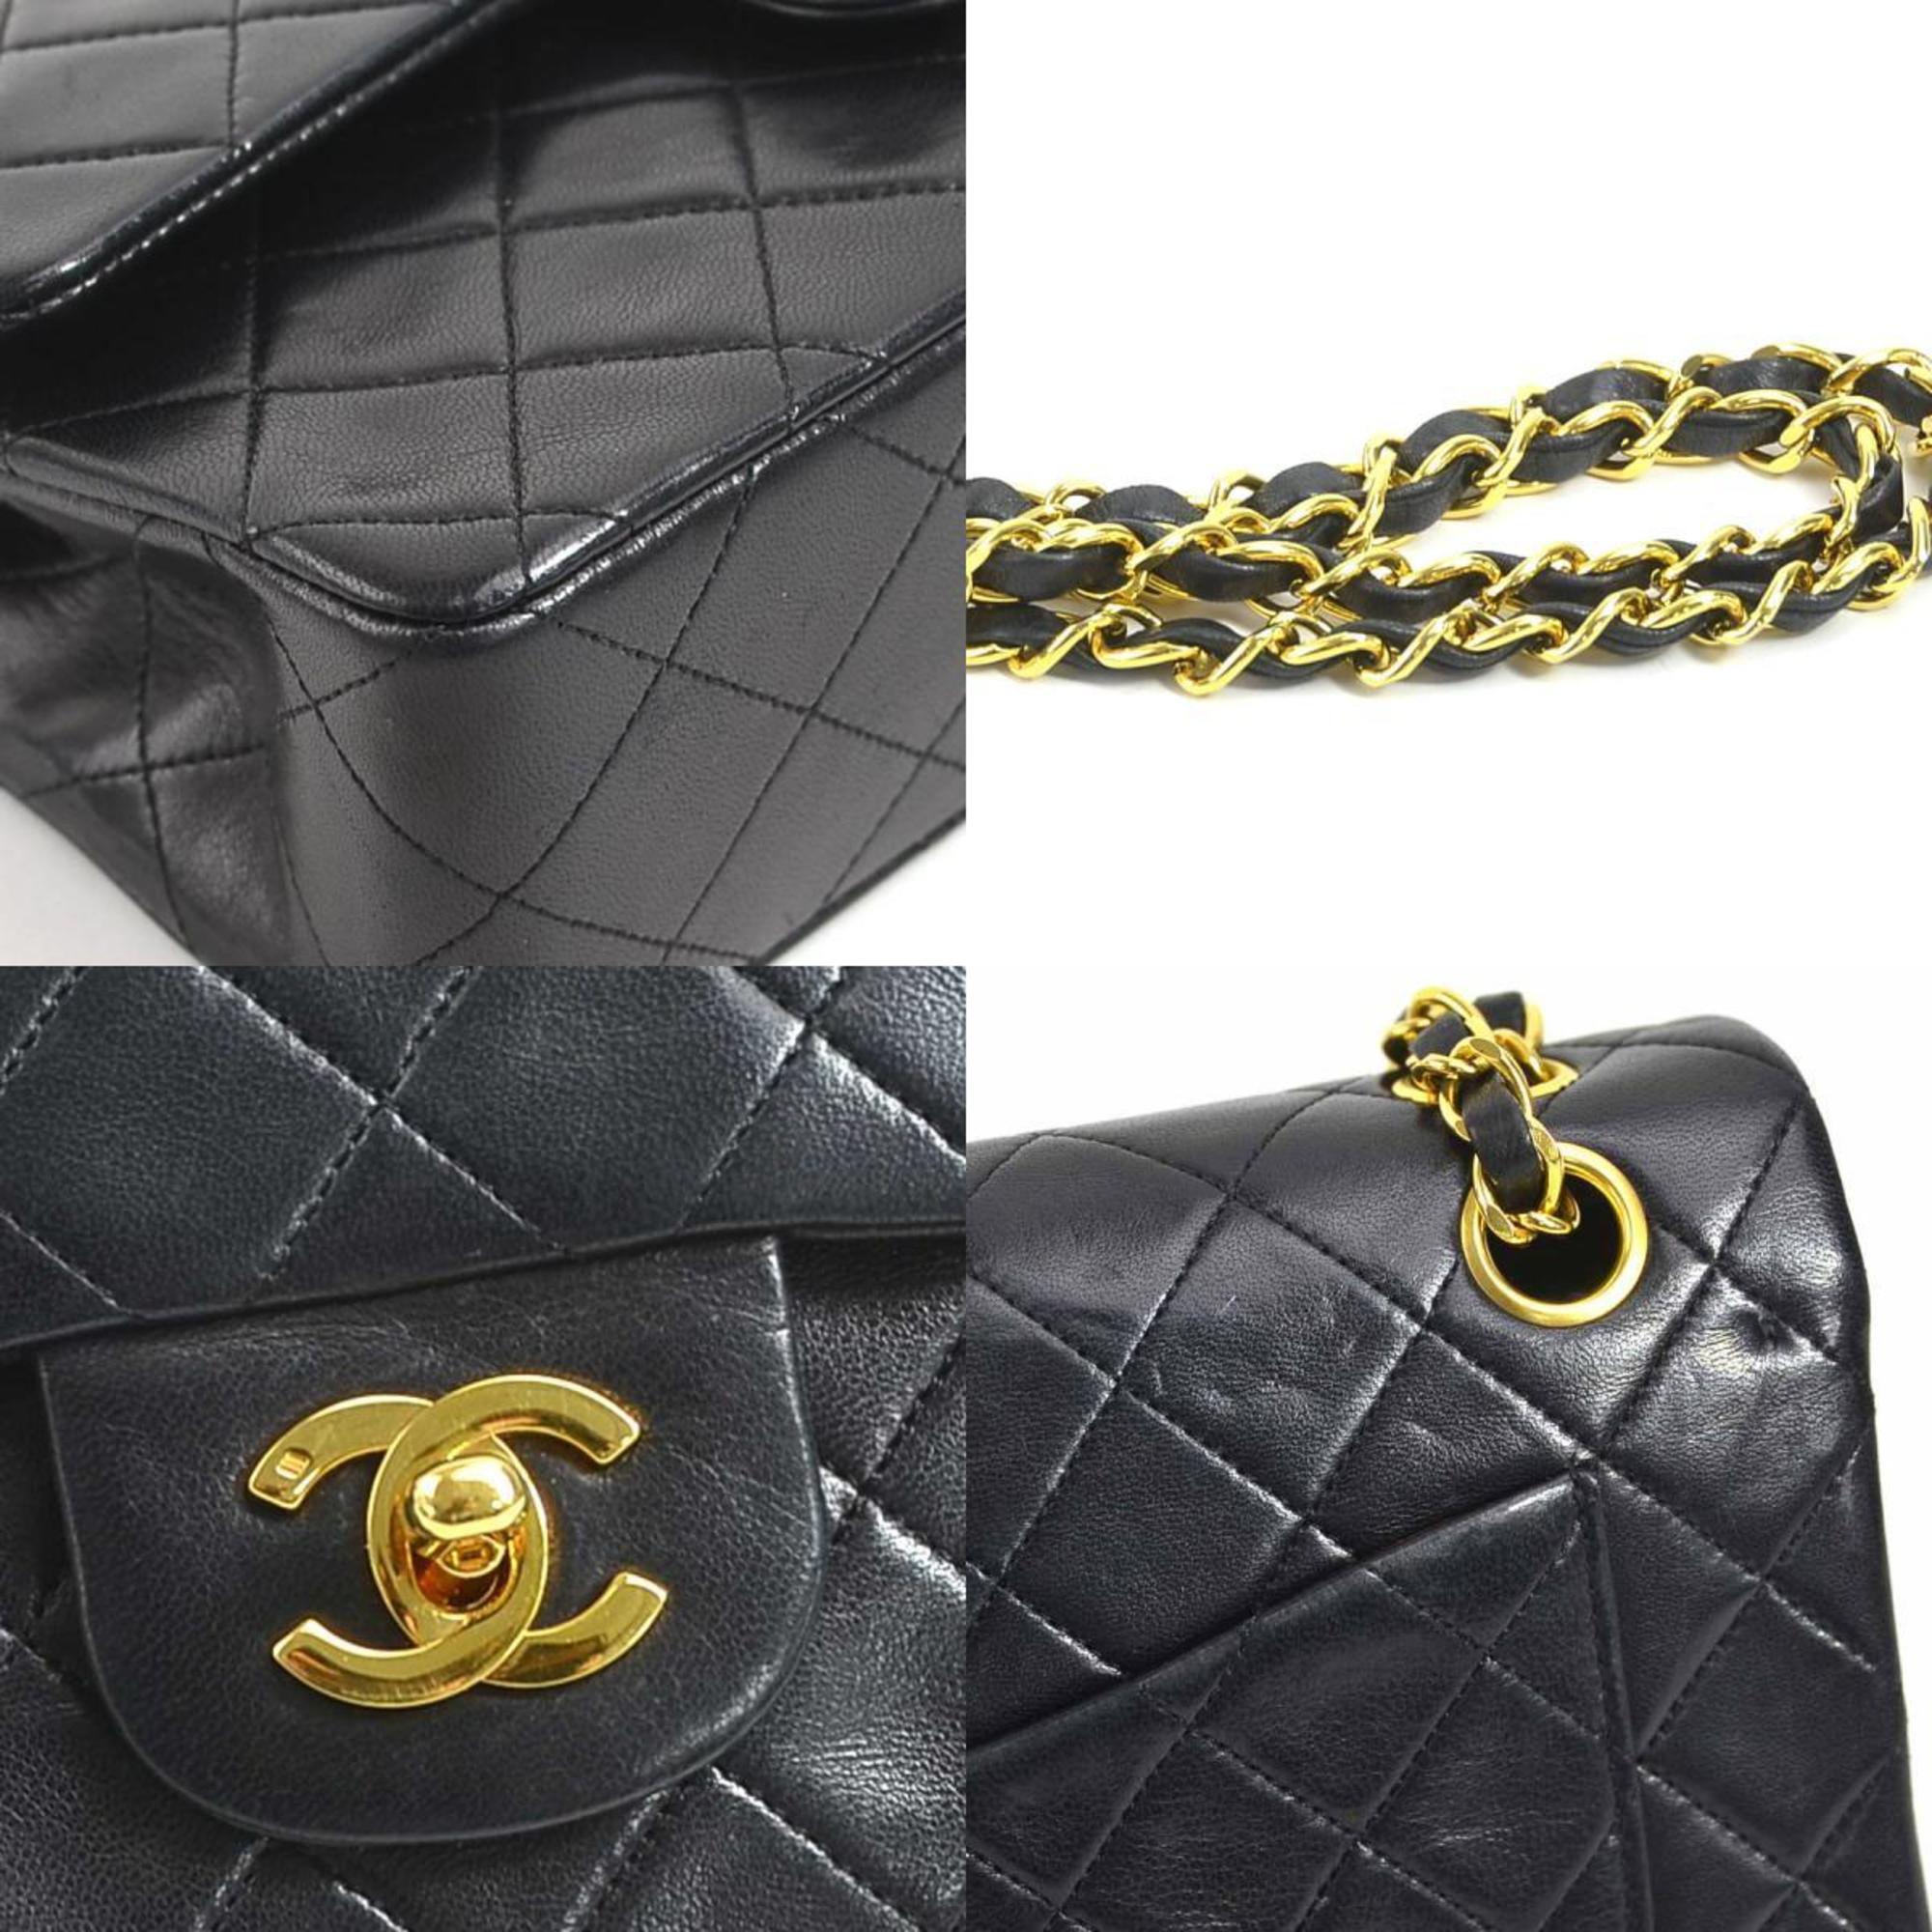 CHANEL Shoulder Bag Matelasse Double Flap Leather/Metal Black/Gold Women's e58466g